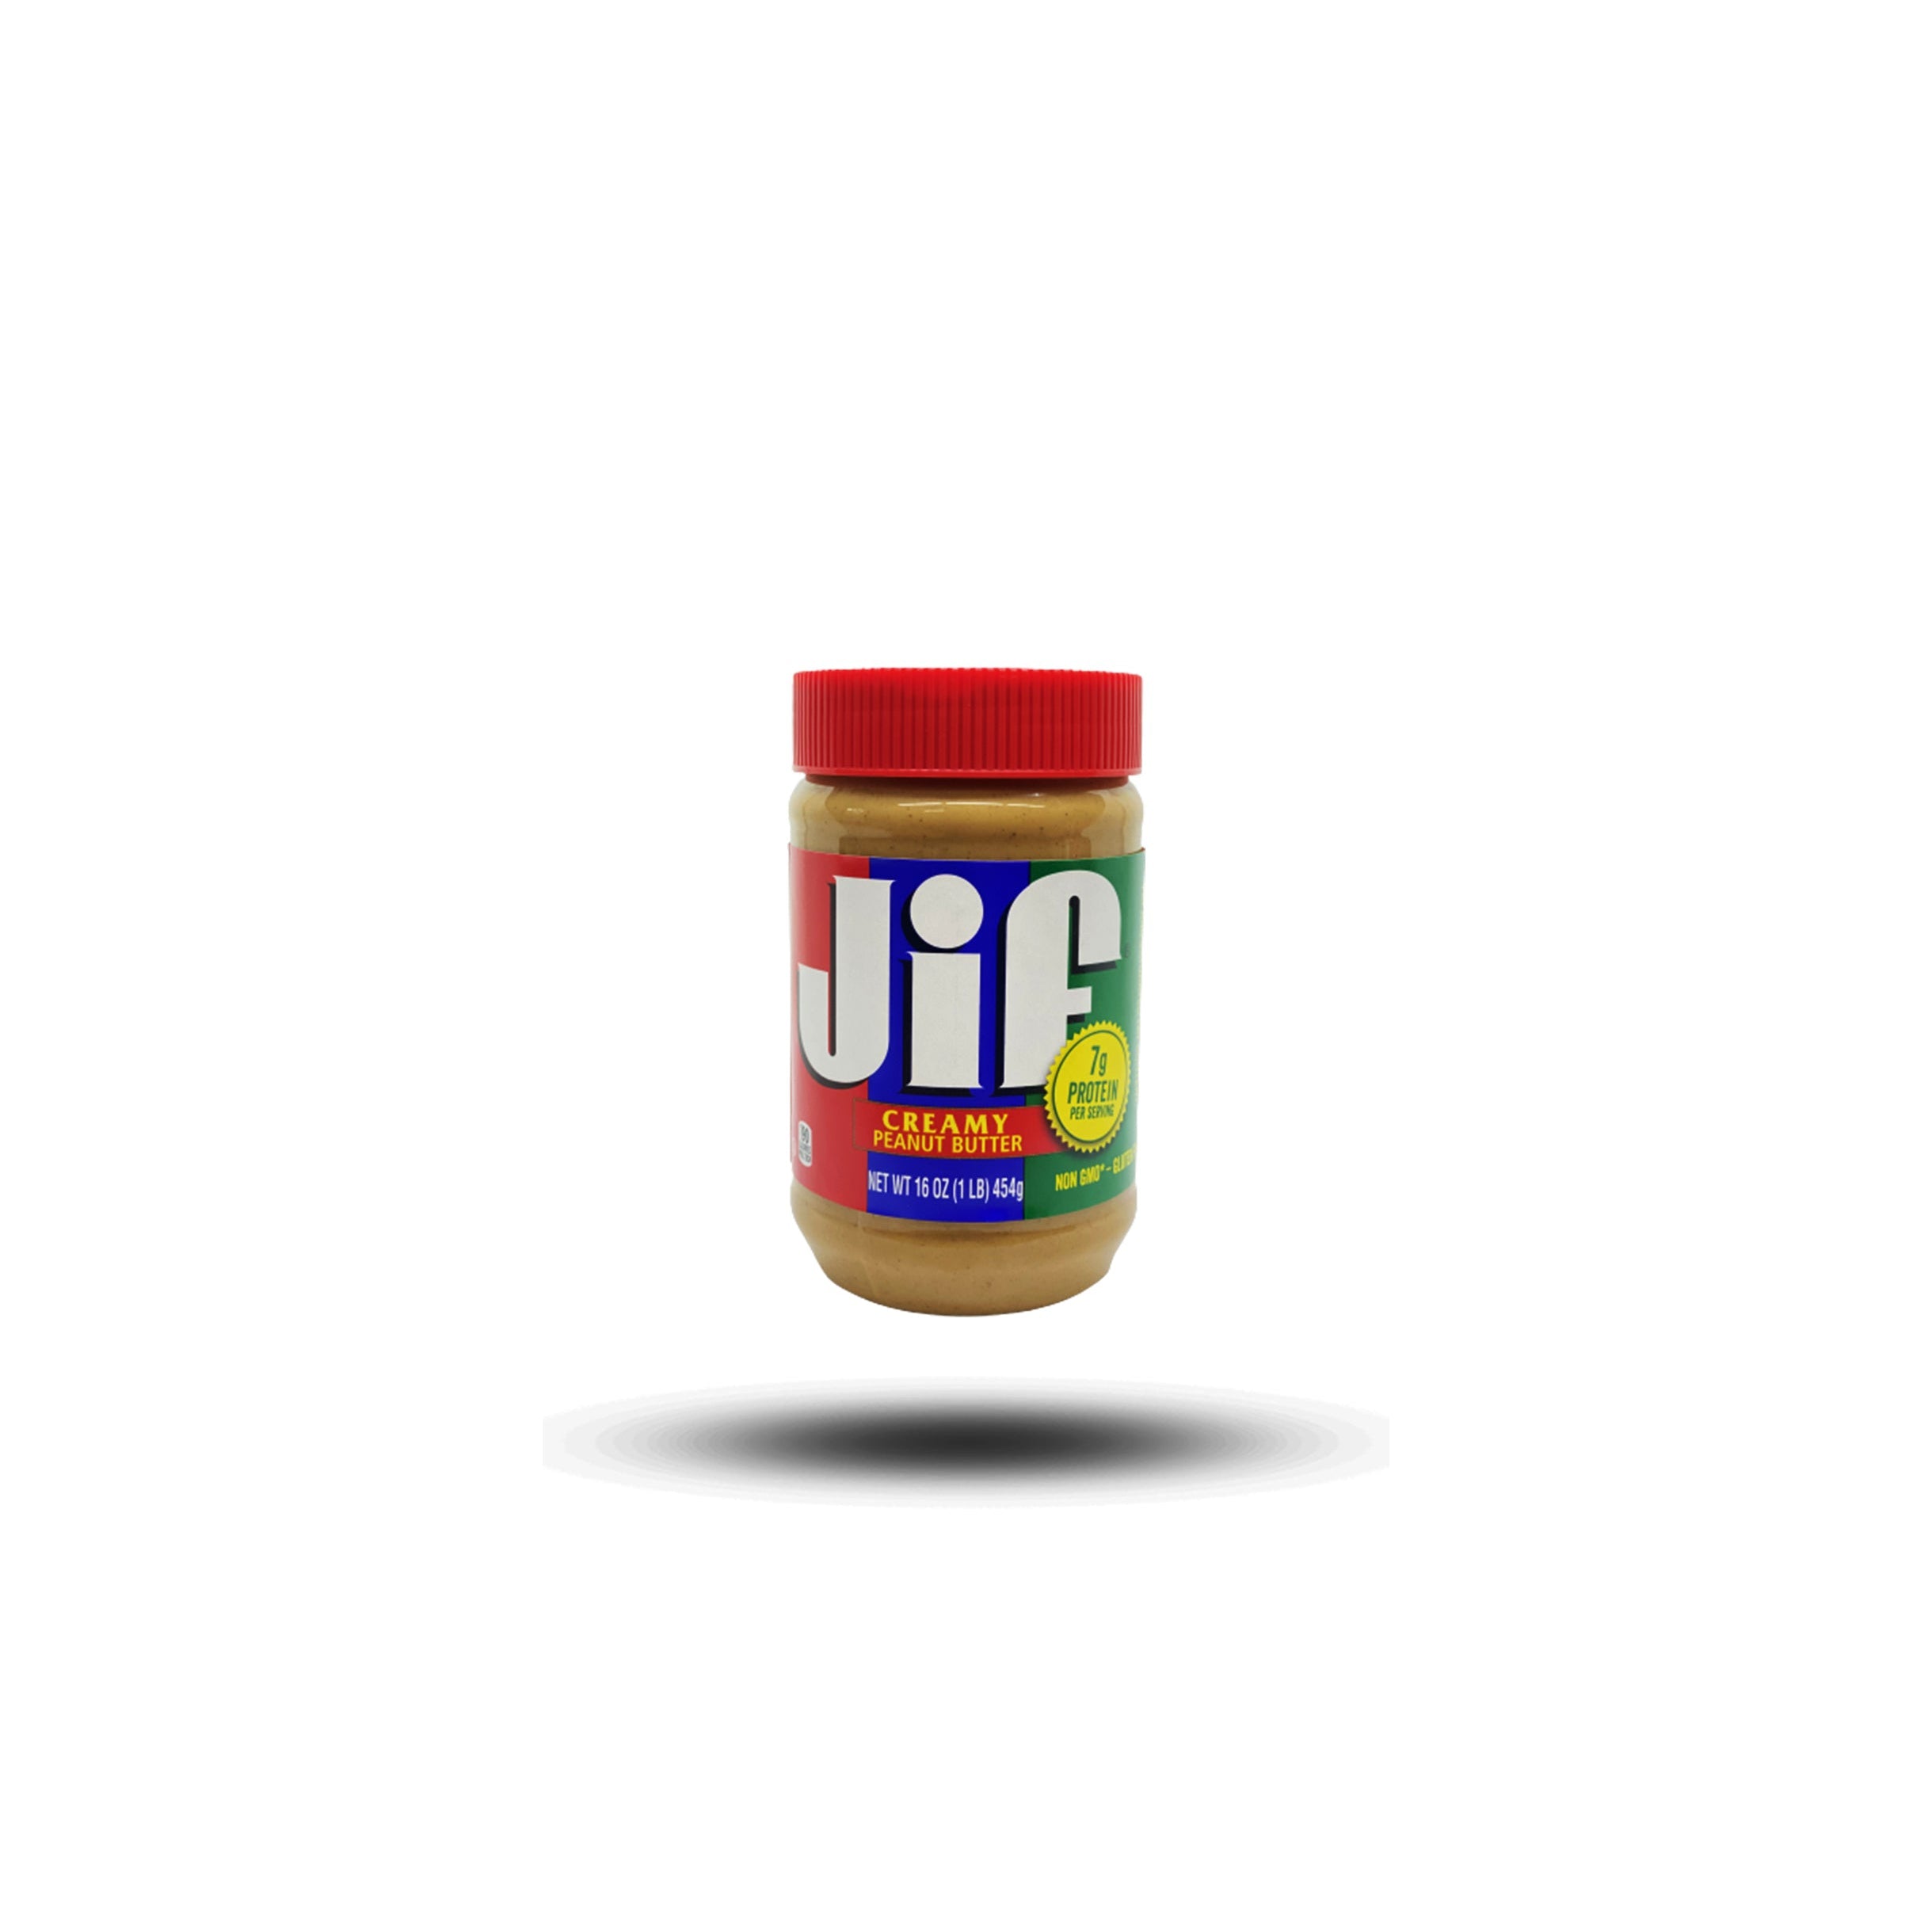 Jif - Creamy Peanut Butter 454g-The J.M Smucker Company-SNACK SHOP AUSTRIA